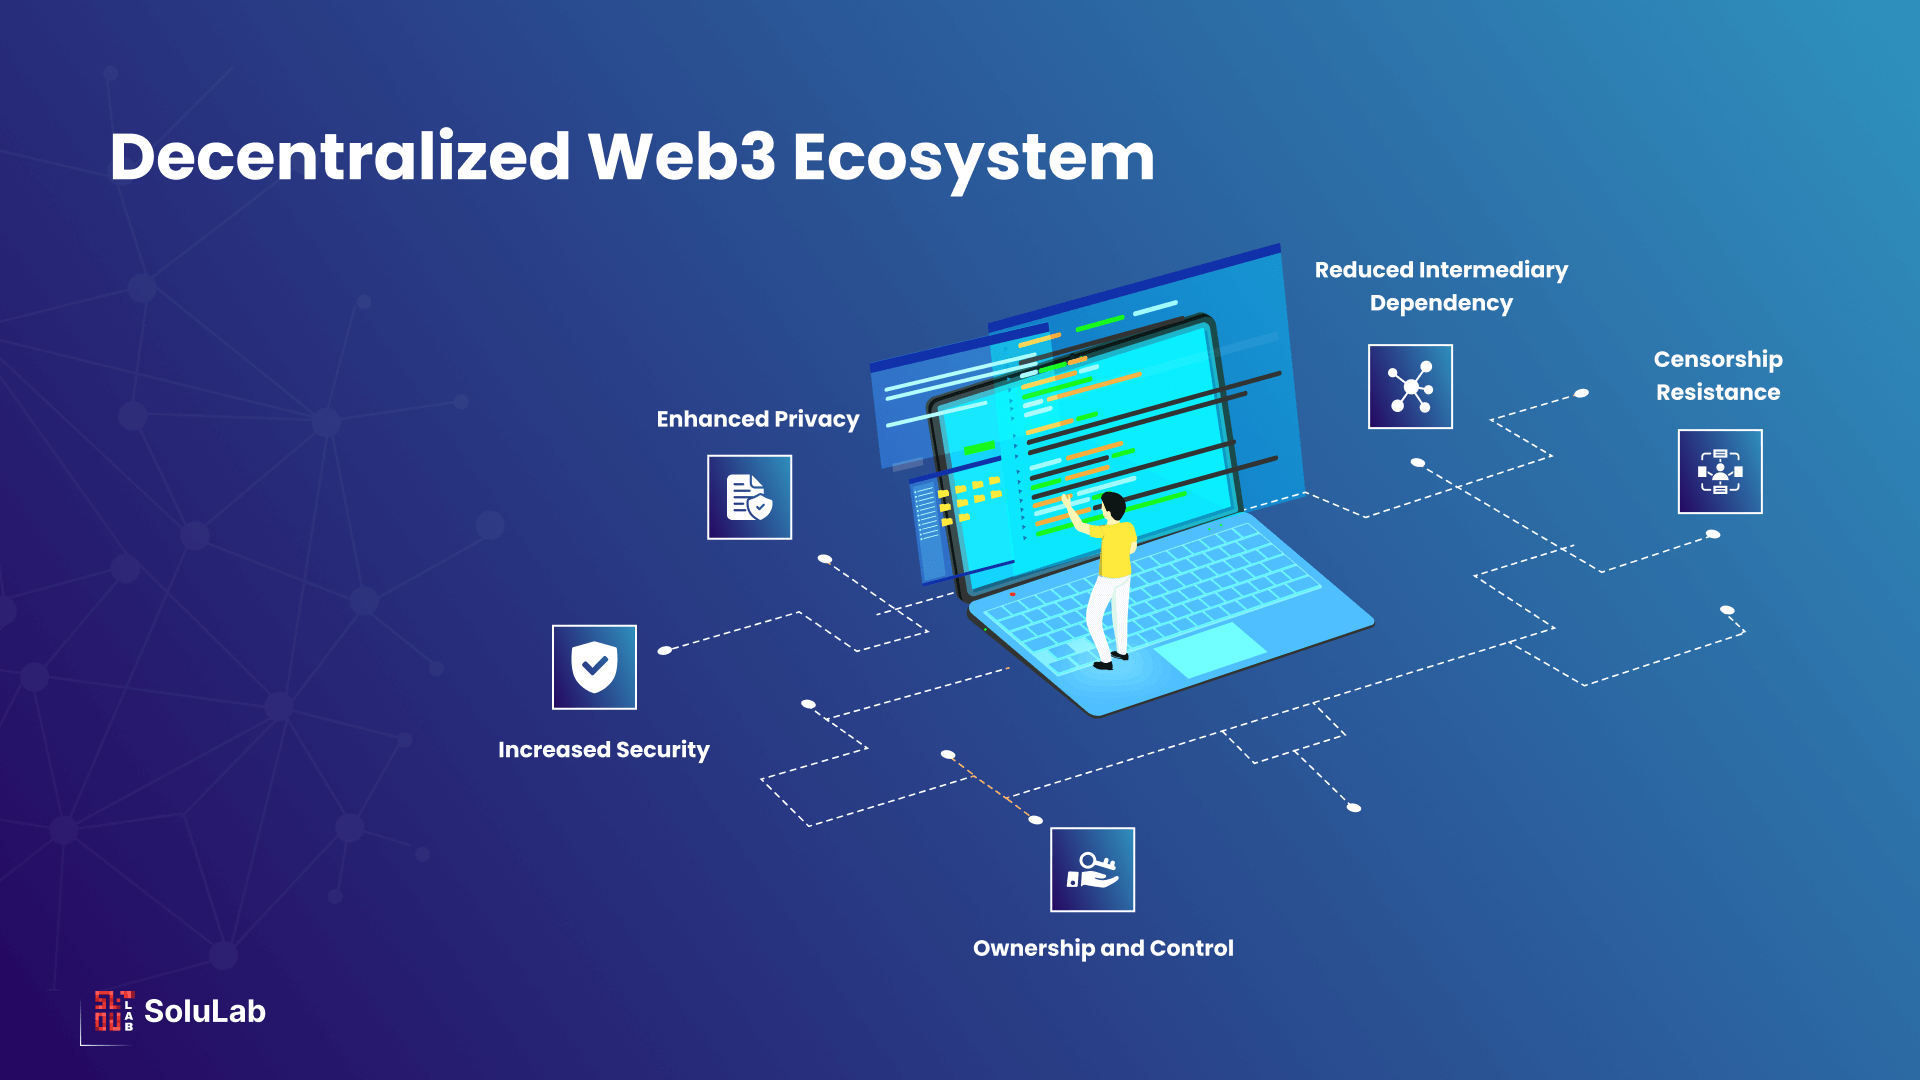 Build a Decentralized Web3 Ecosystem